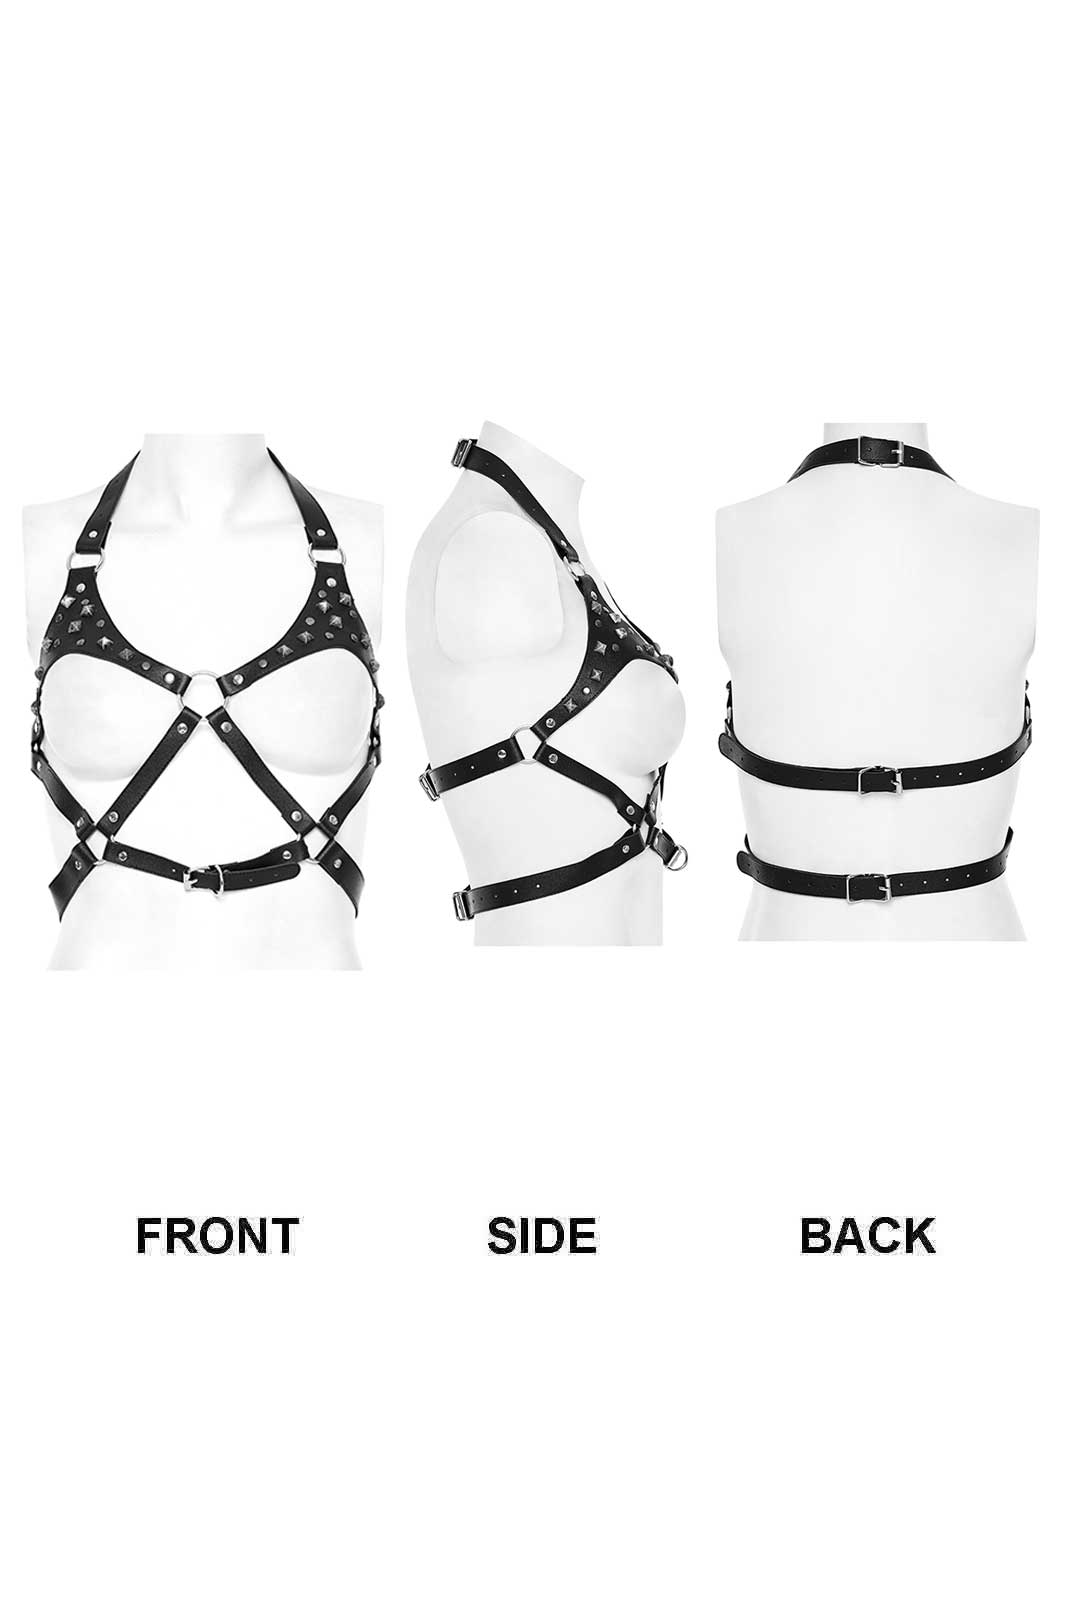 https://cdn02.plentymarkets.com/ylx159dj5f0p/item/images/3221/full/S-576-punk-rave-gothic-leather-harness-bra-1.jpg